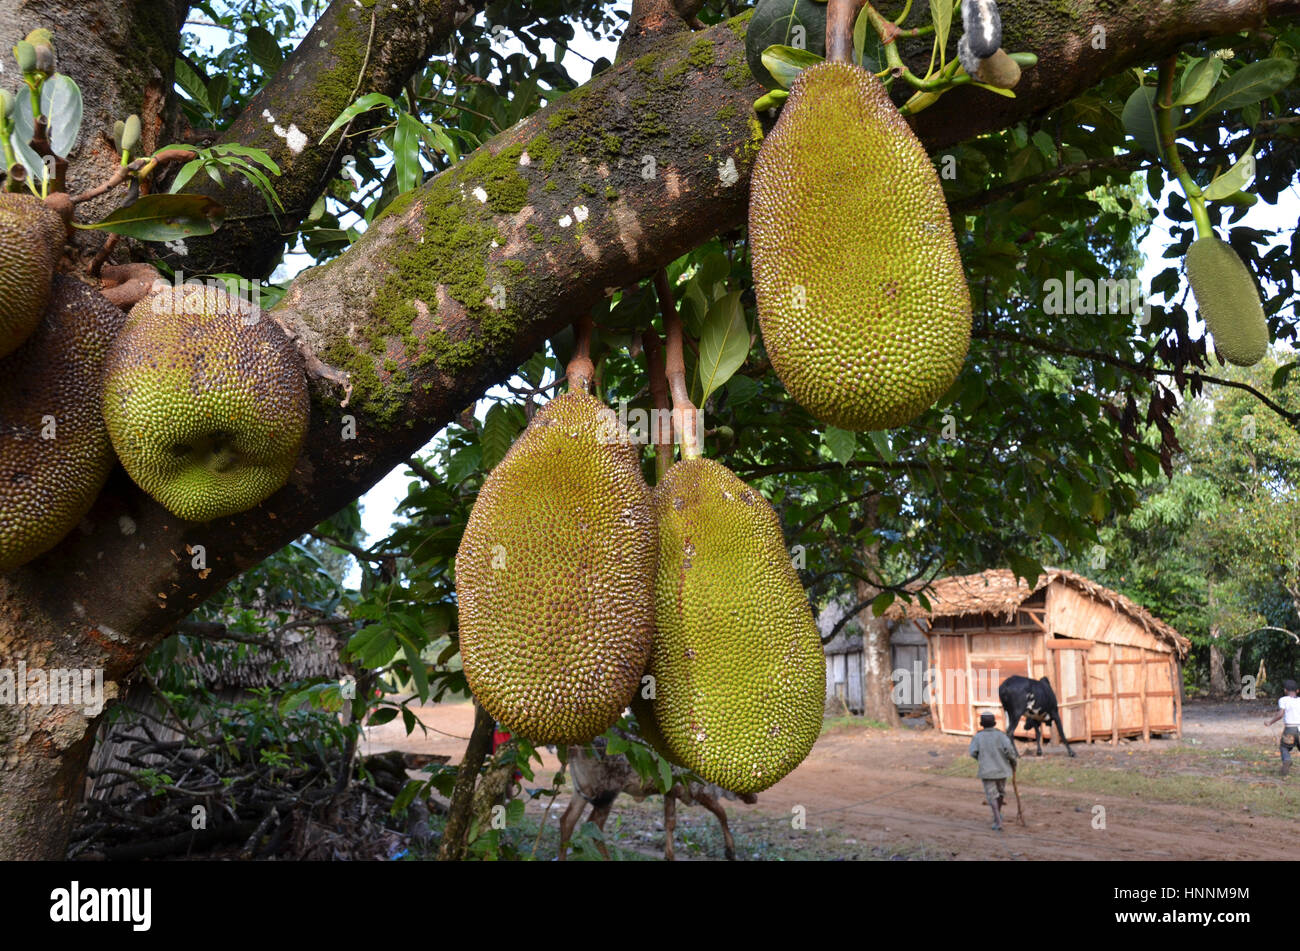 Jackfruit tree in Madagascar village Stock Photo